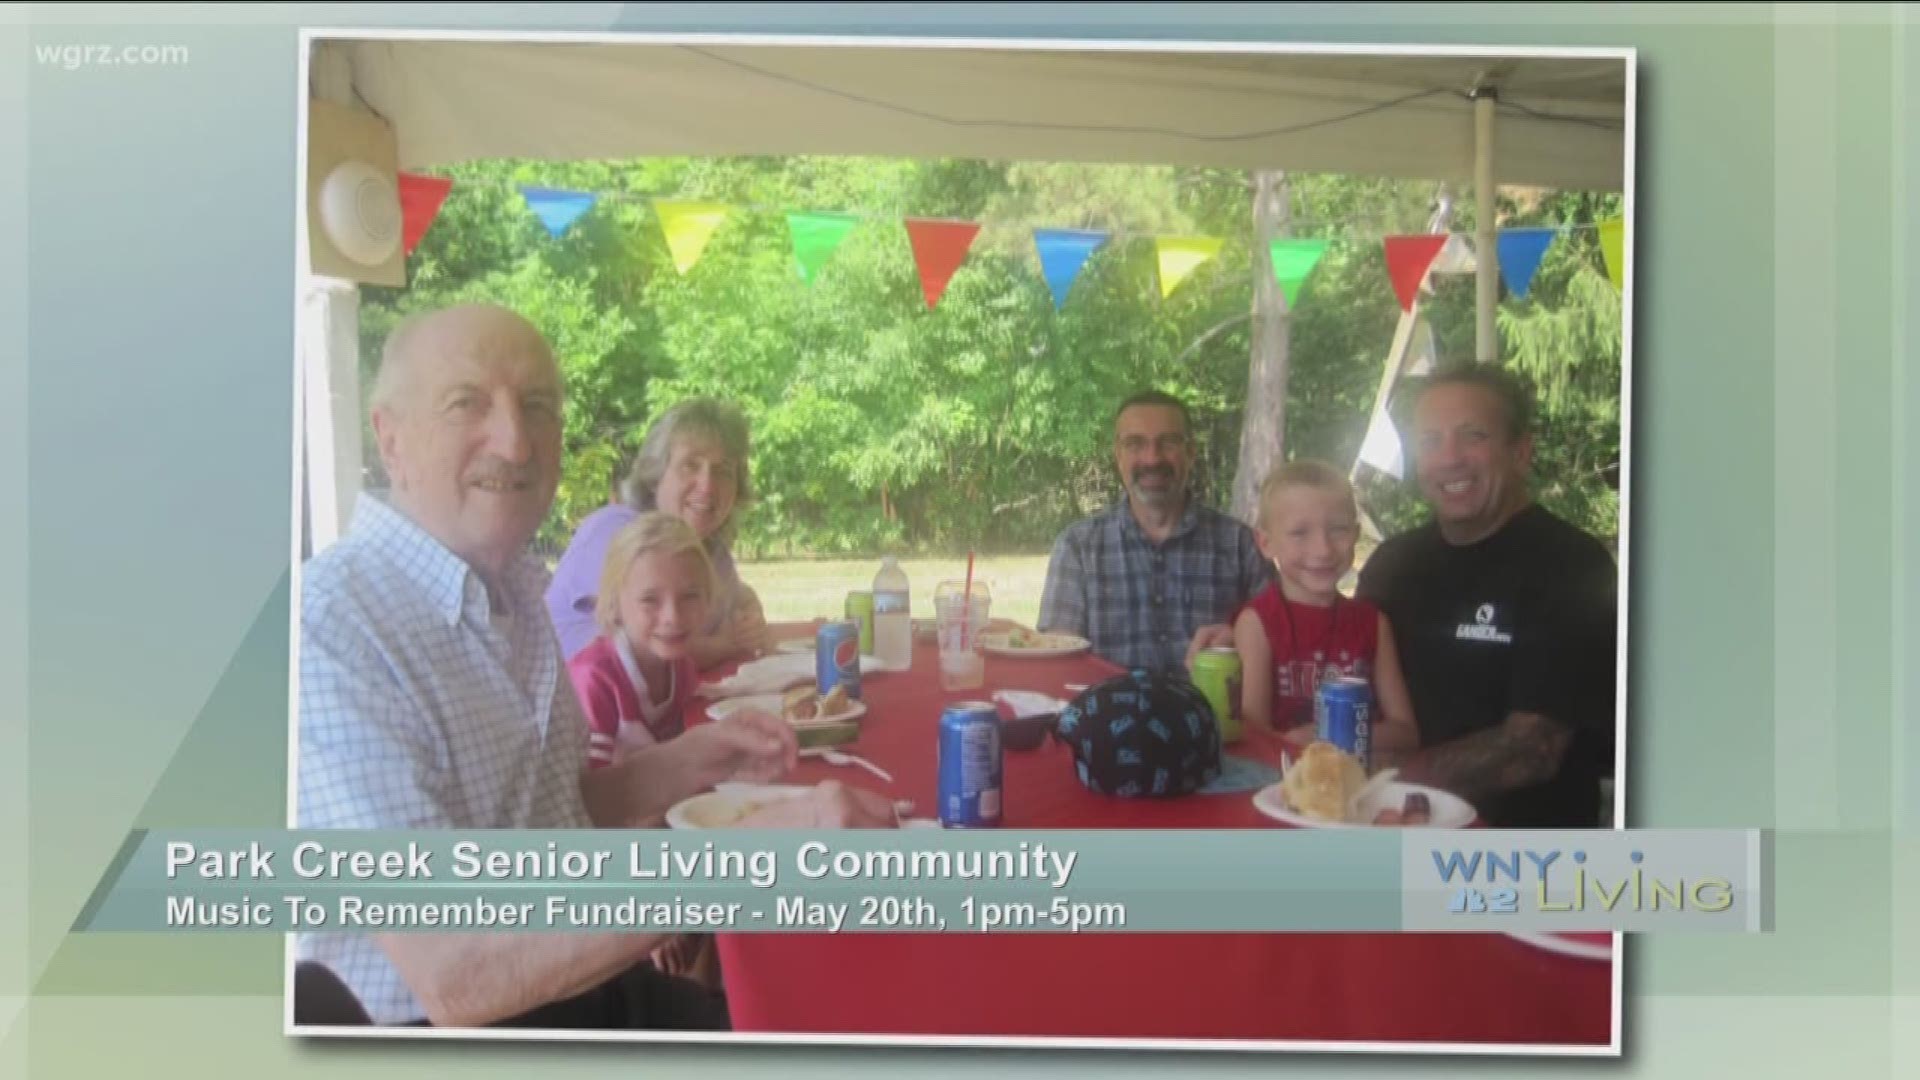 WNY Living - May 19 - Park Creek Senior Living Community